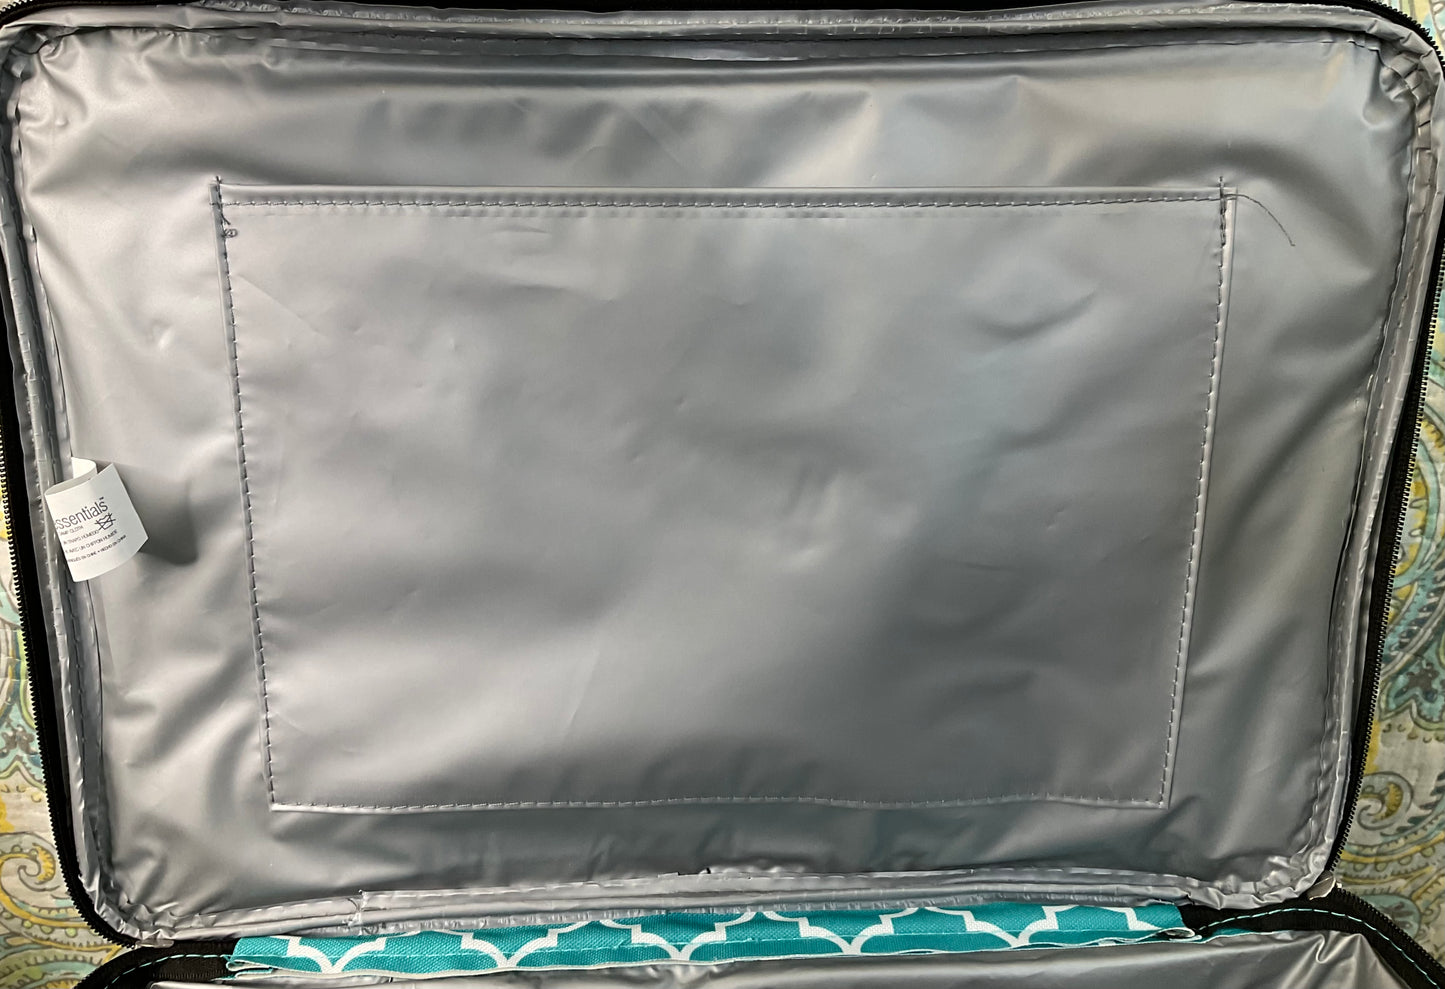 Home Essentials Teal Casserole Insulated Bag Set, 2 pc